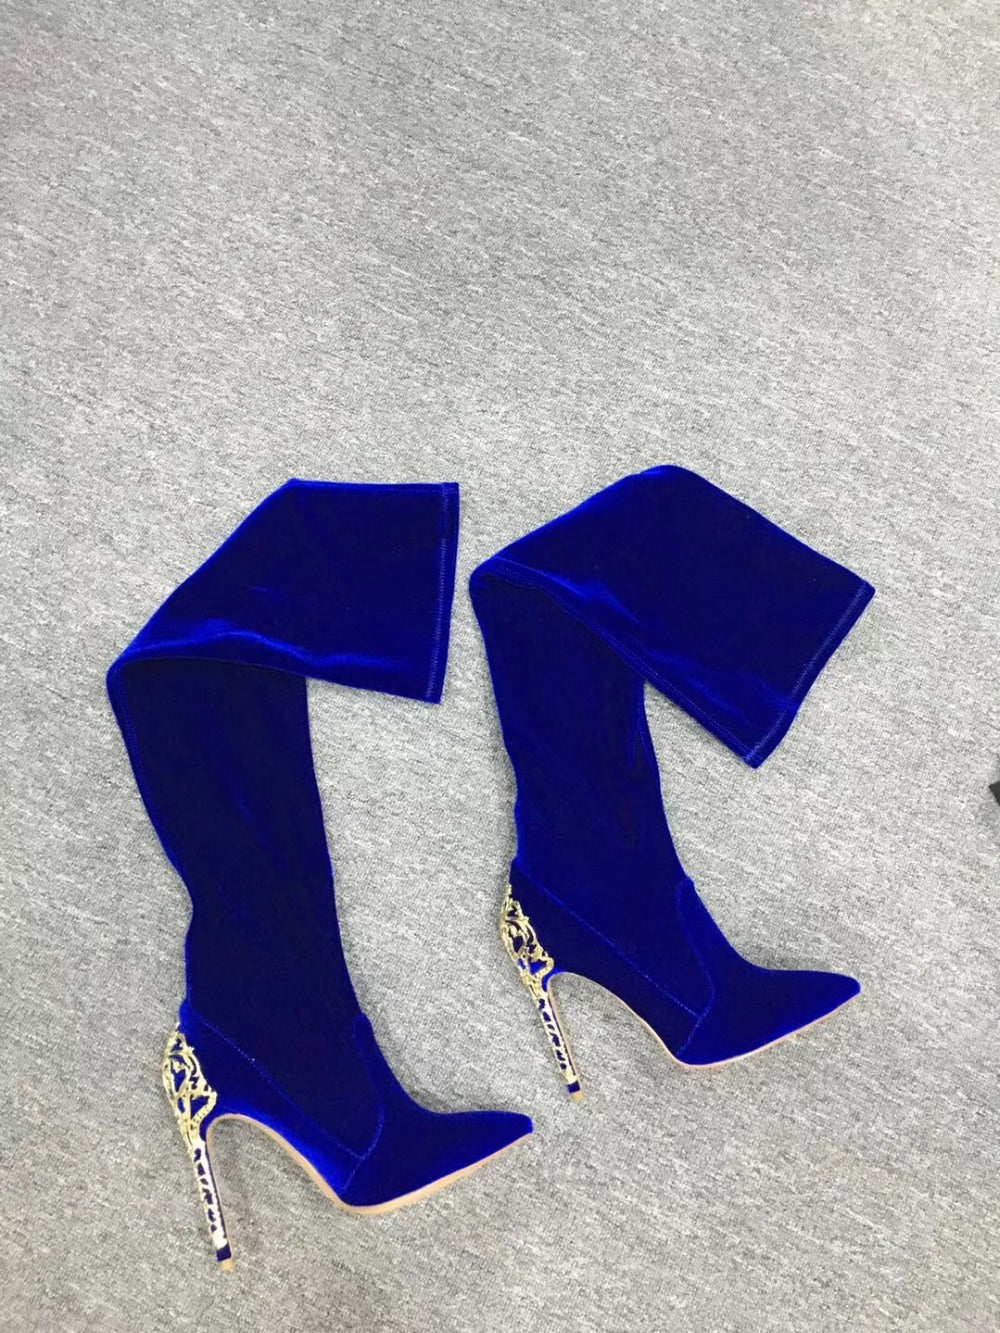 royal blue thigh boots